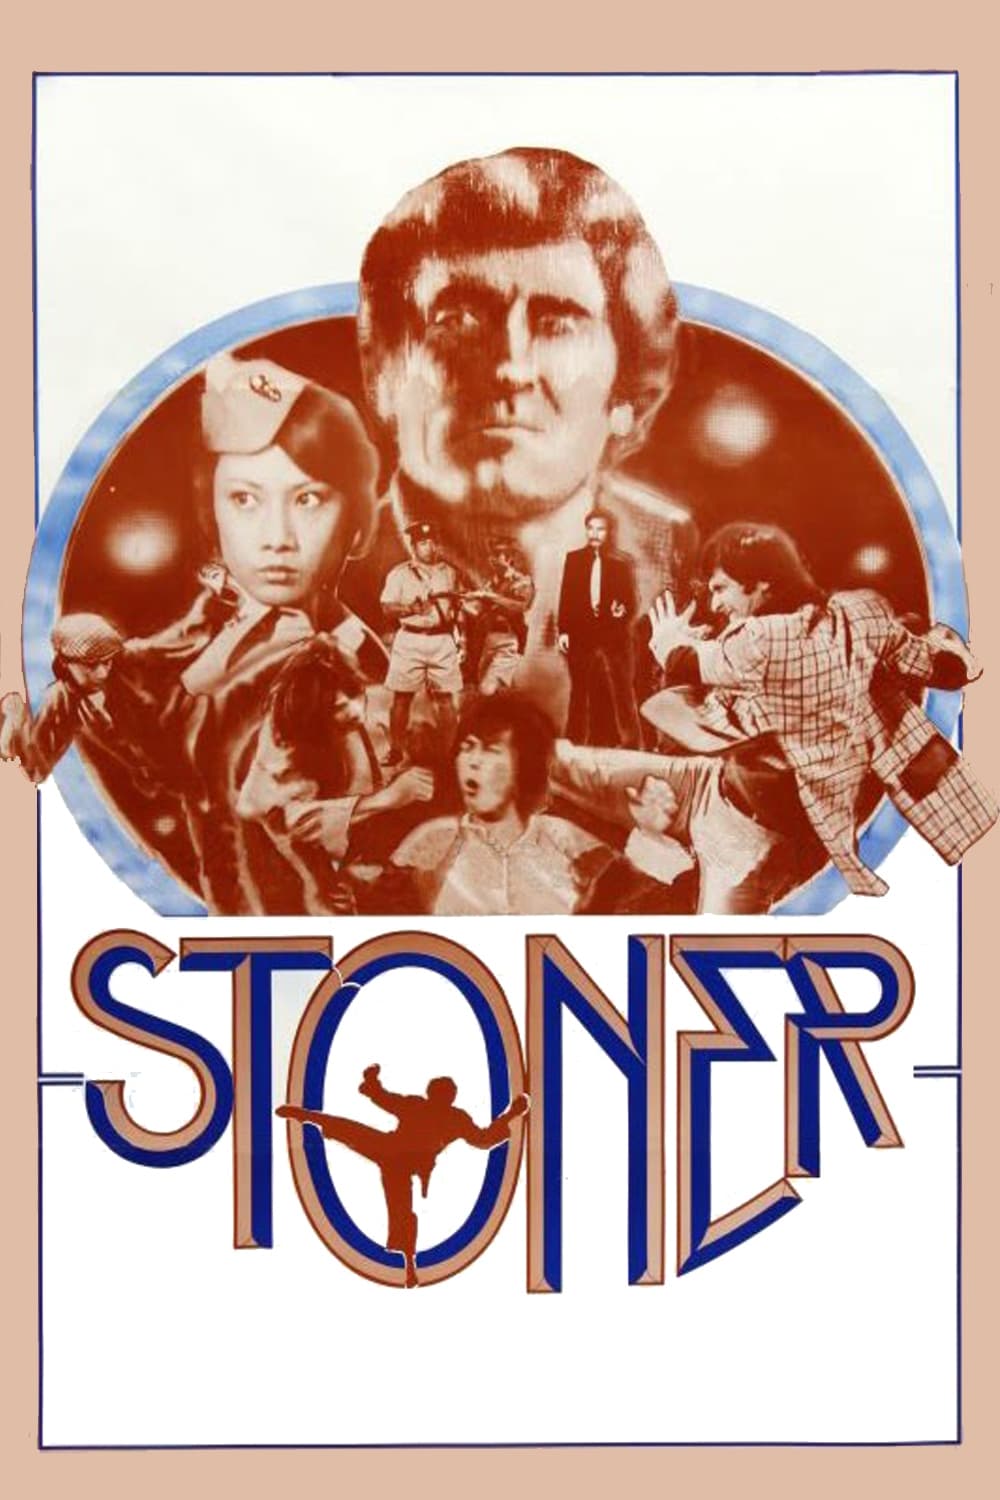 Stoner (1974)